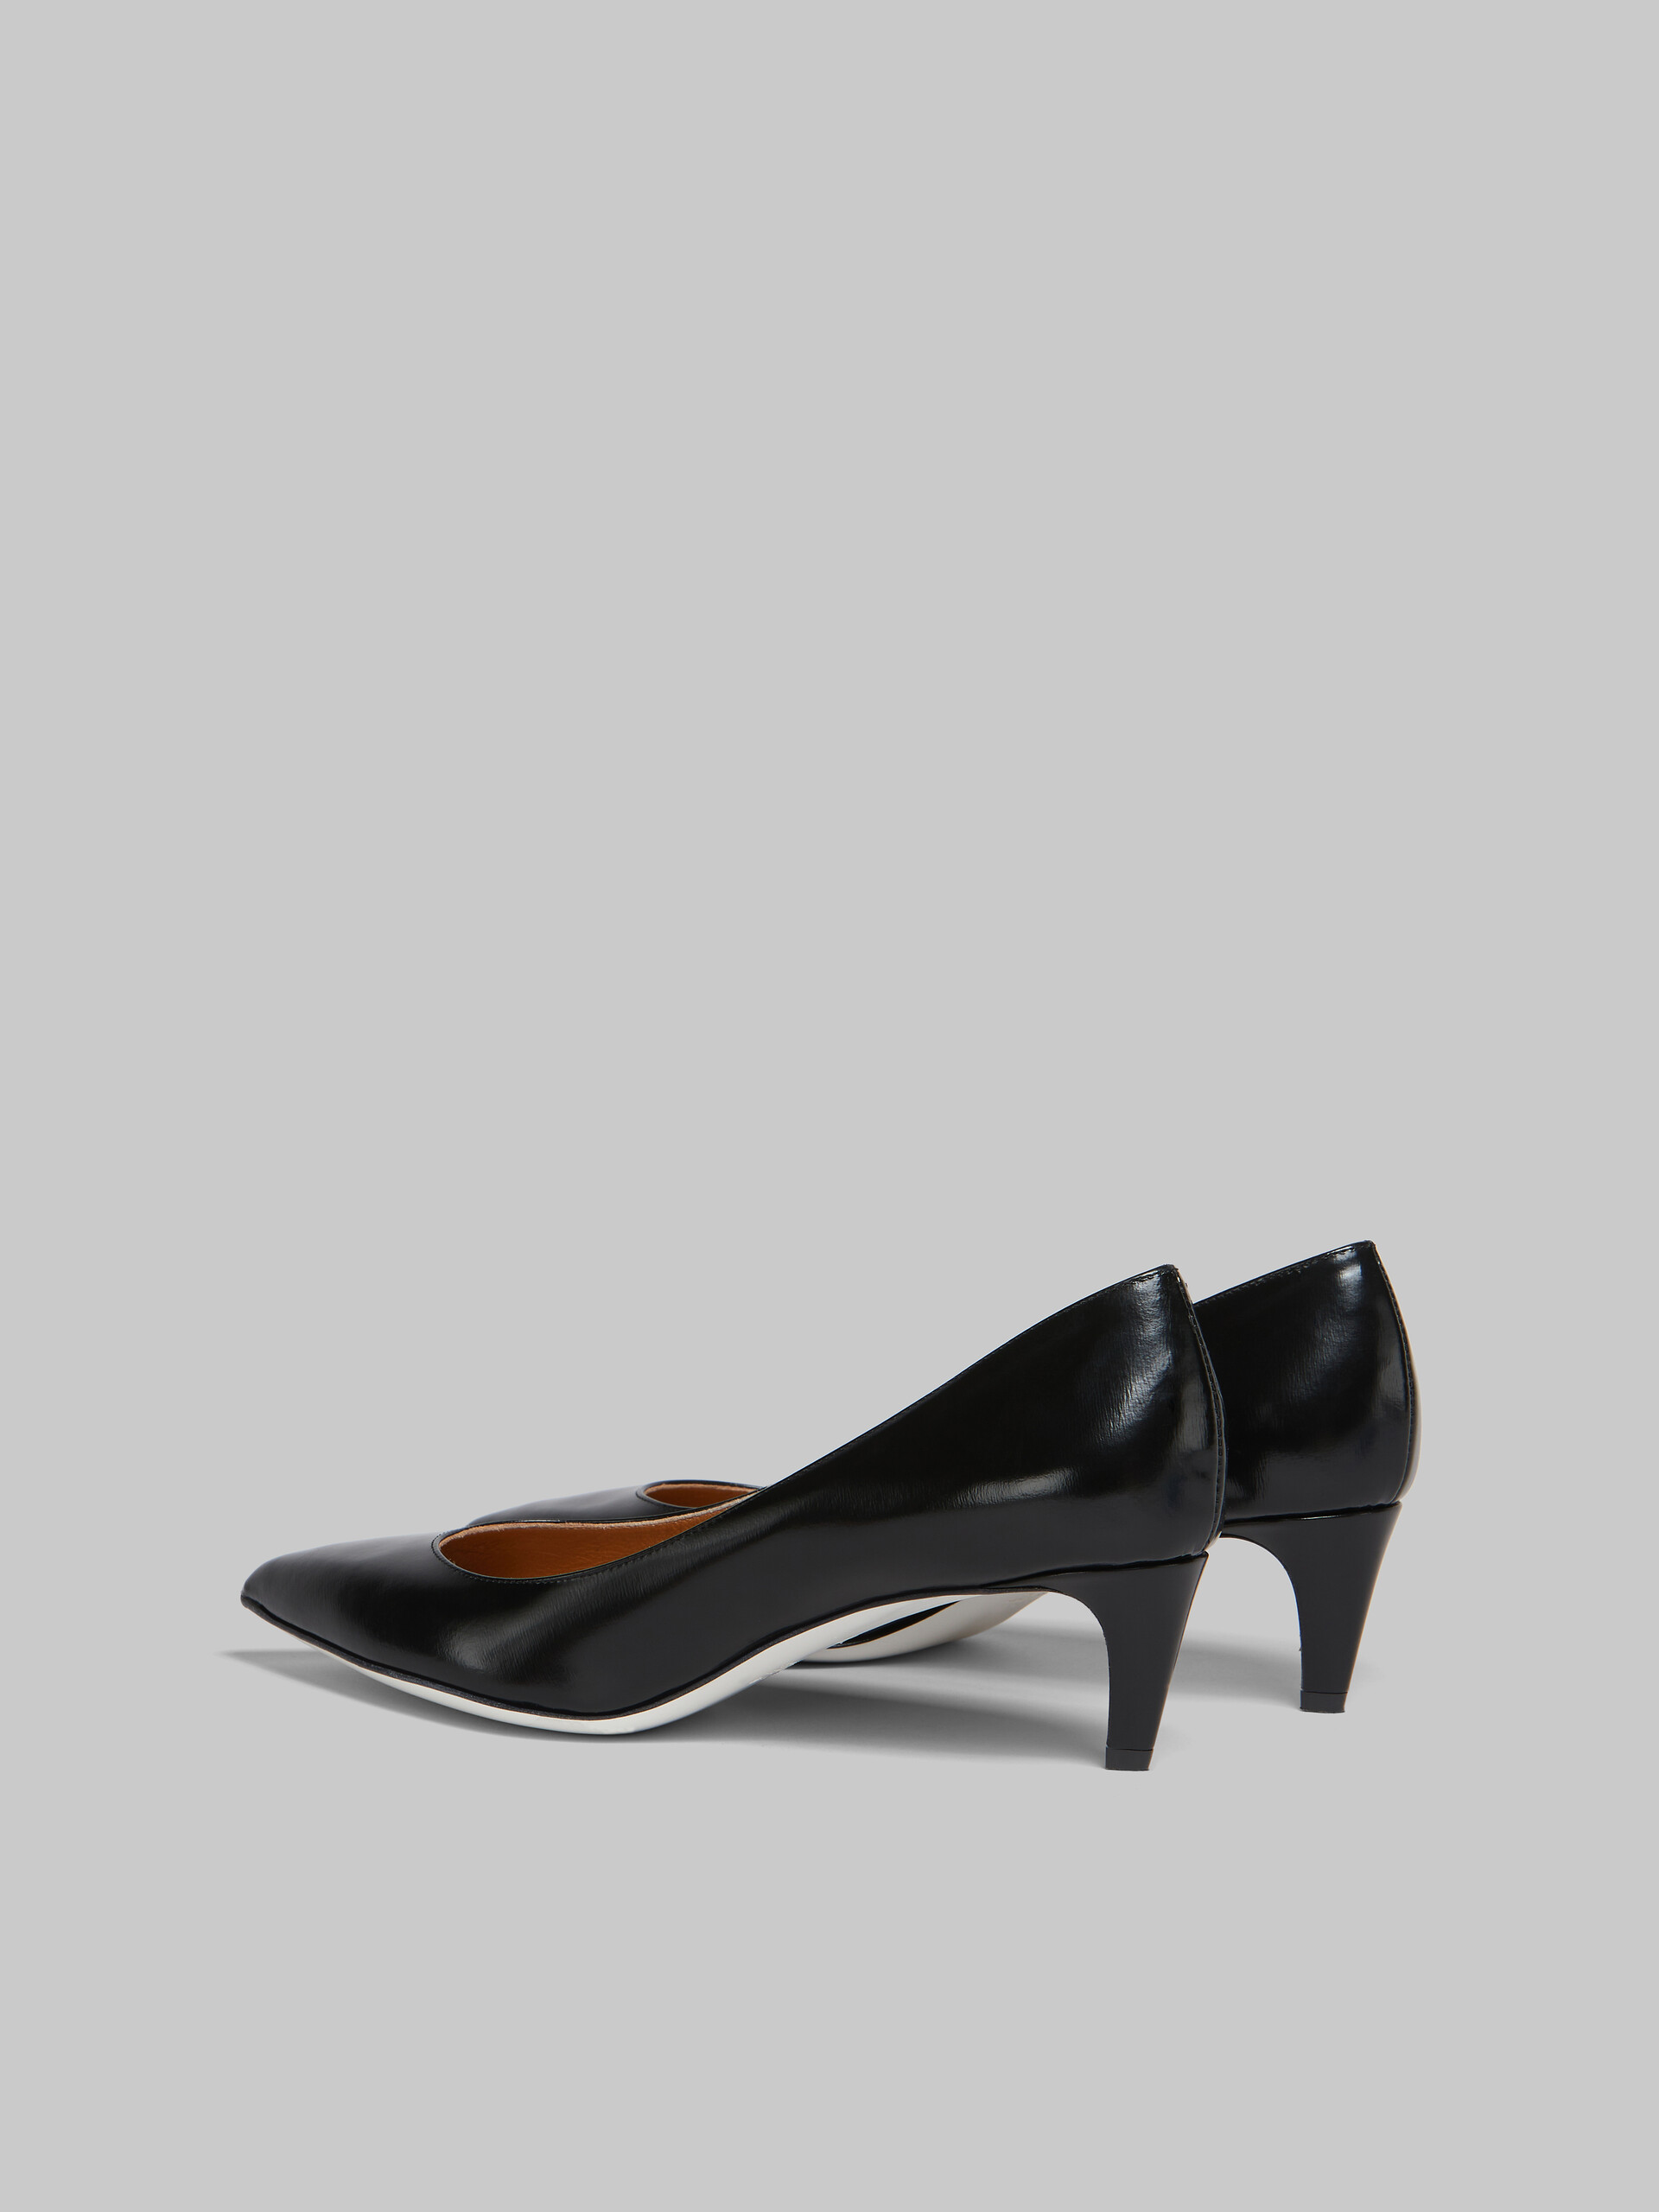 Zapato de salón Rhythm de piel estilo palmellato negra - Salones - Image 3